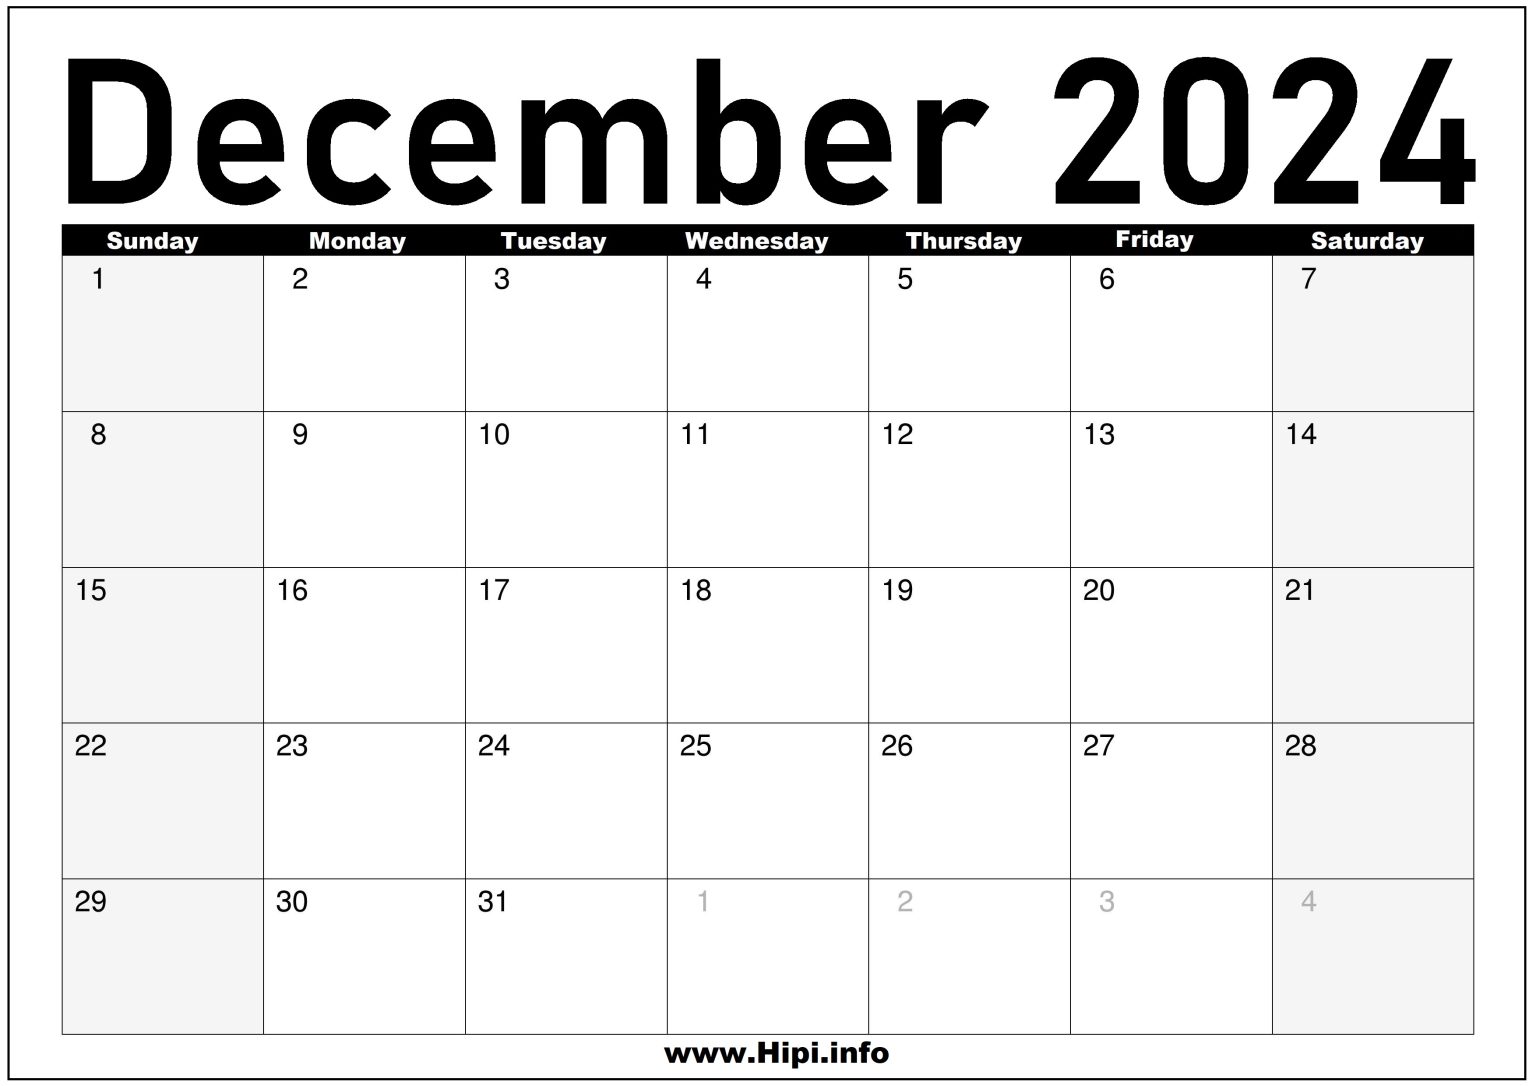 December 2024 Monthly Calendar Hipi.info